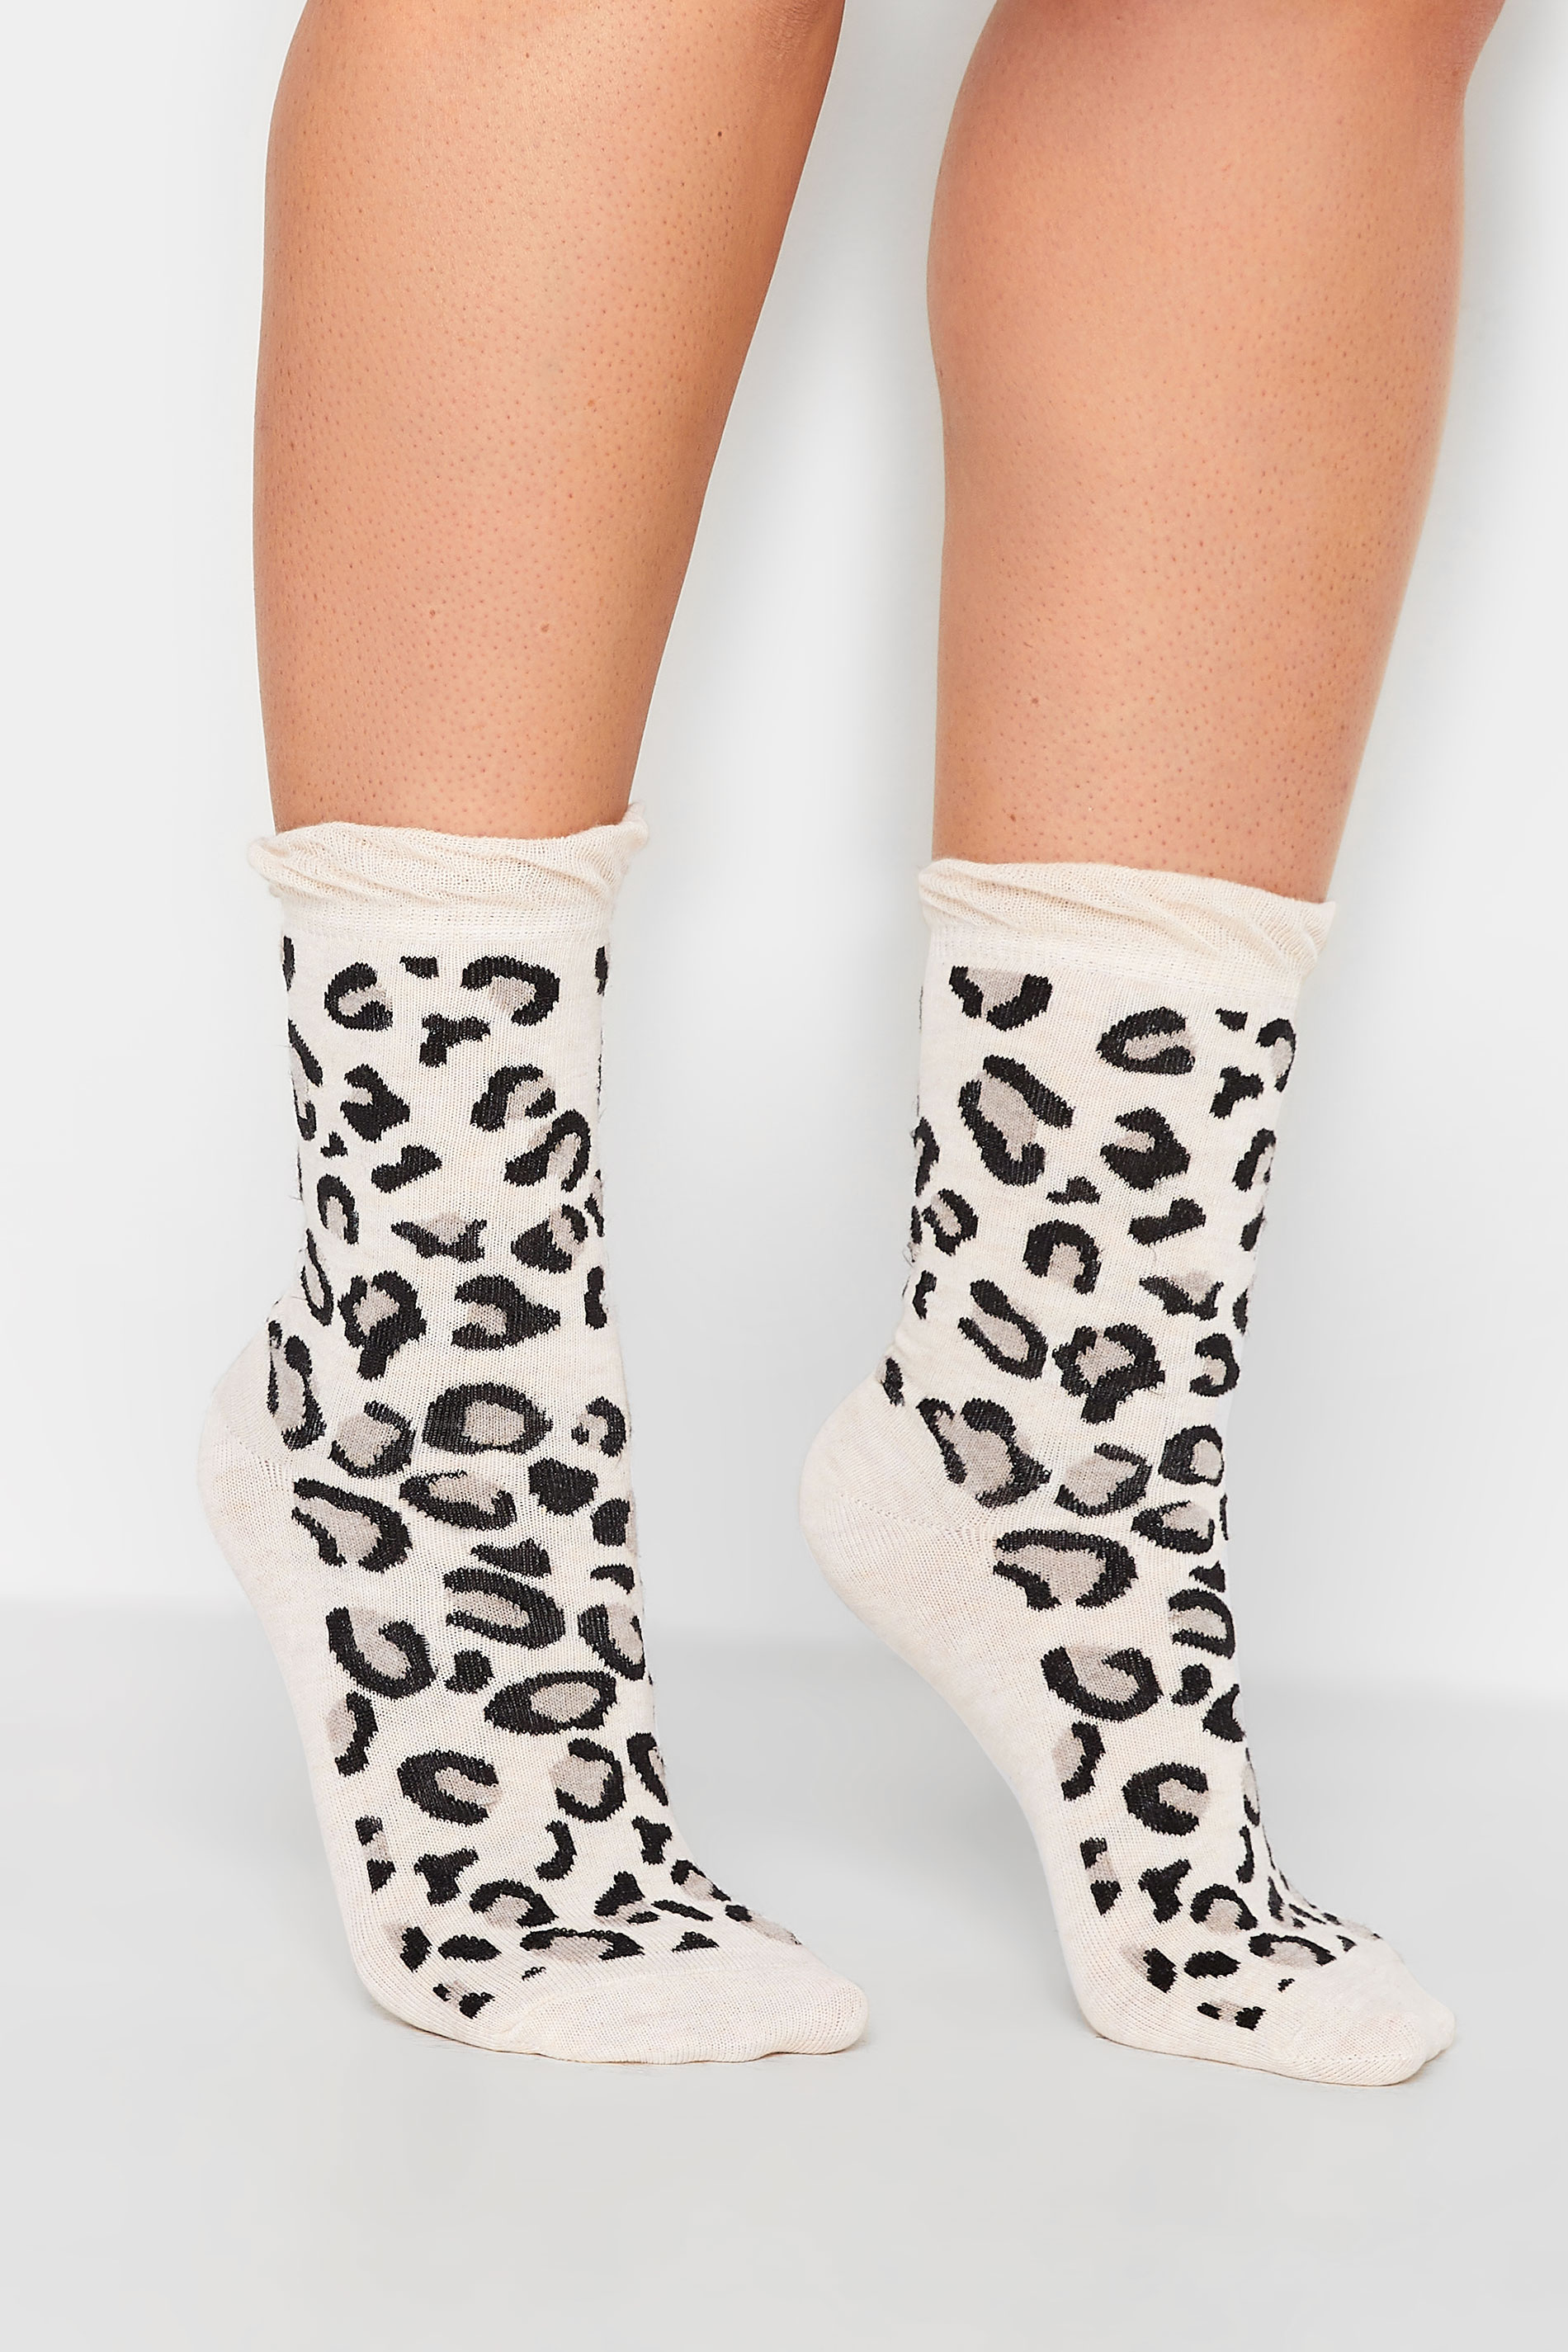 4 PACK White & Black Animal Print Socks | Yours Clothing  2